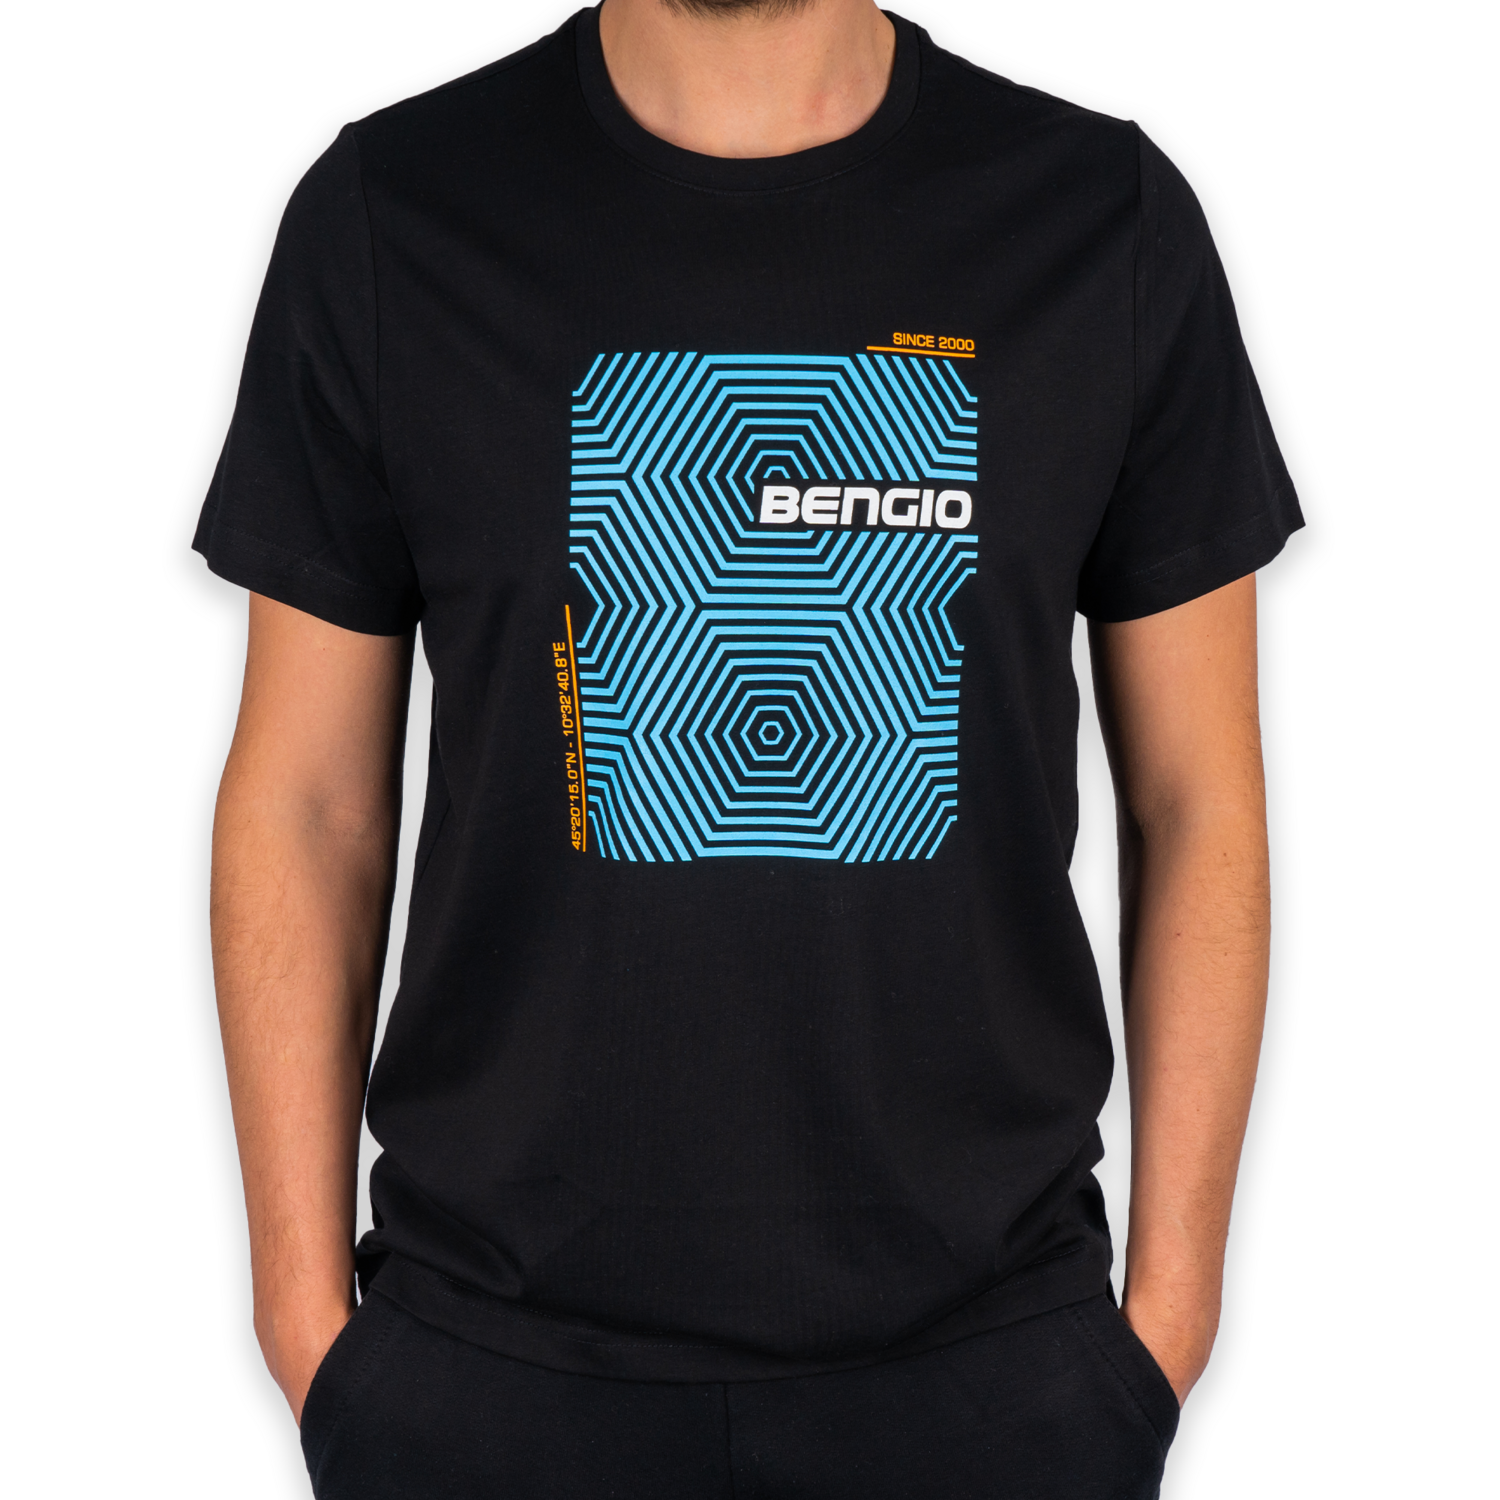 Bengio T-Shirt Black/Blue